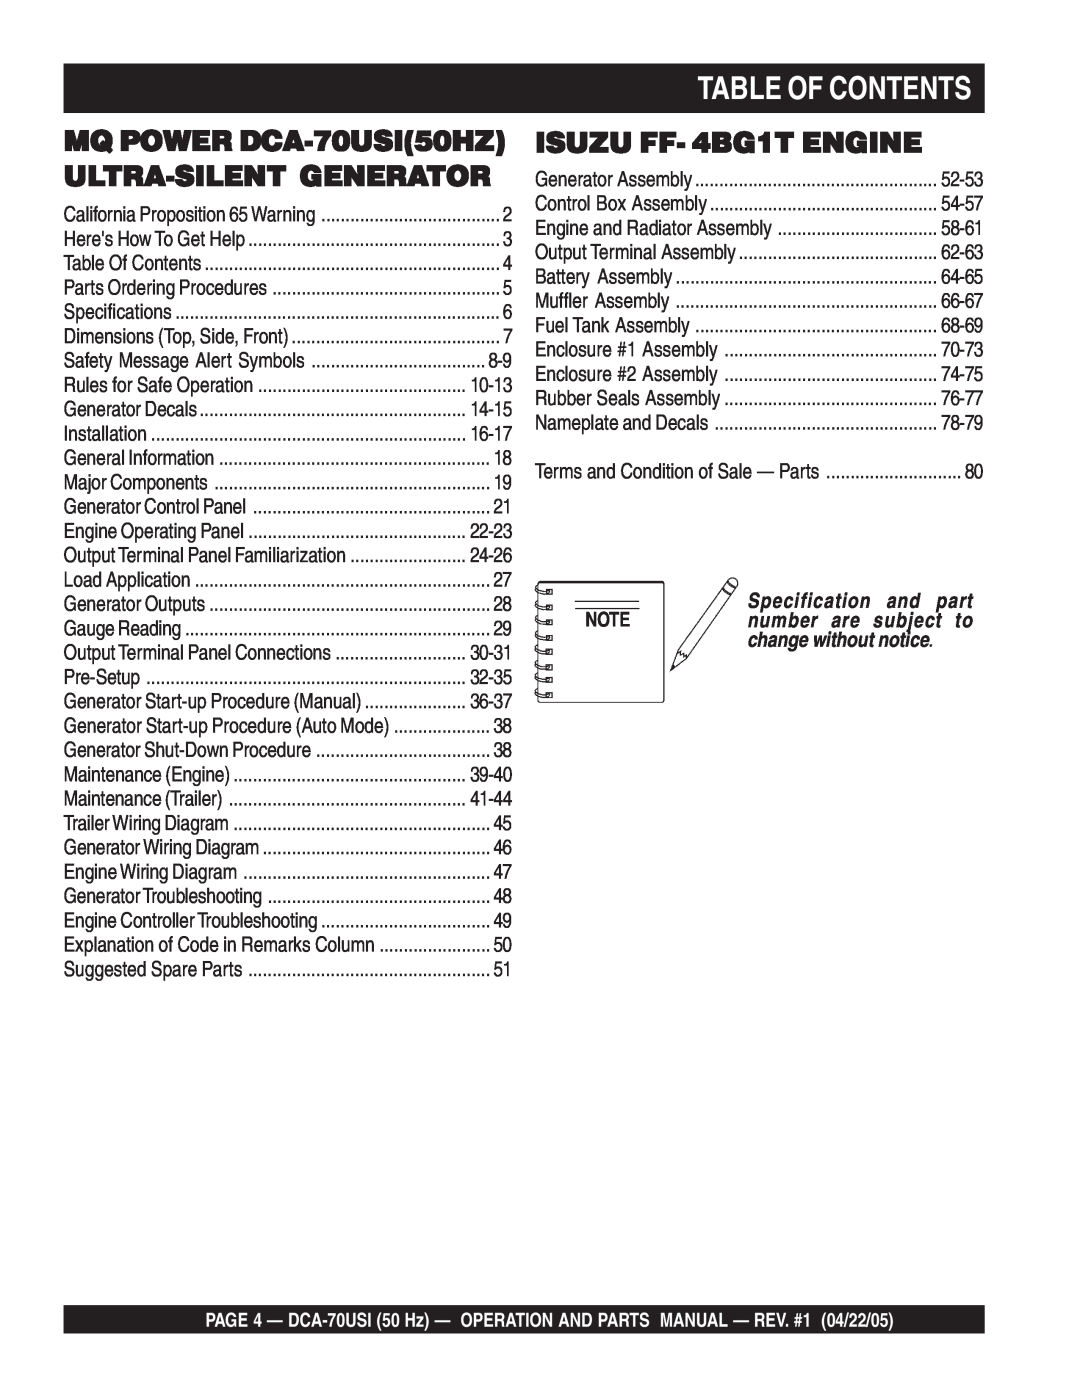 Multiquip operation manual Table Of Contents, MQ POWER DCA-70USI50HZ ULTRA-SILENTGENERATOR, ISUZU FF- 4BG1T ENGINE 